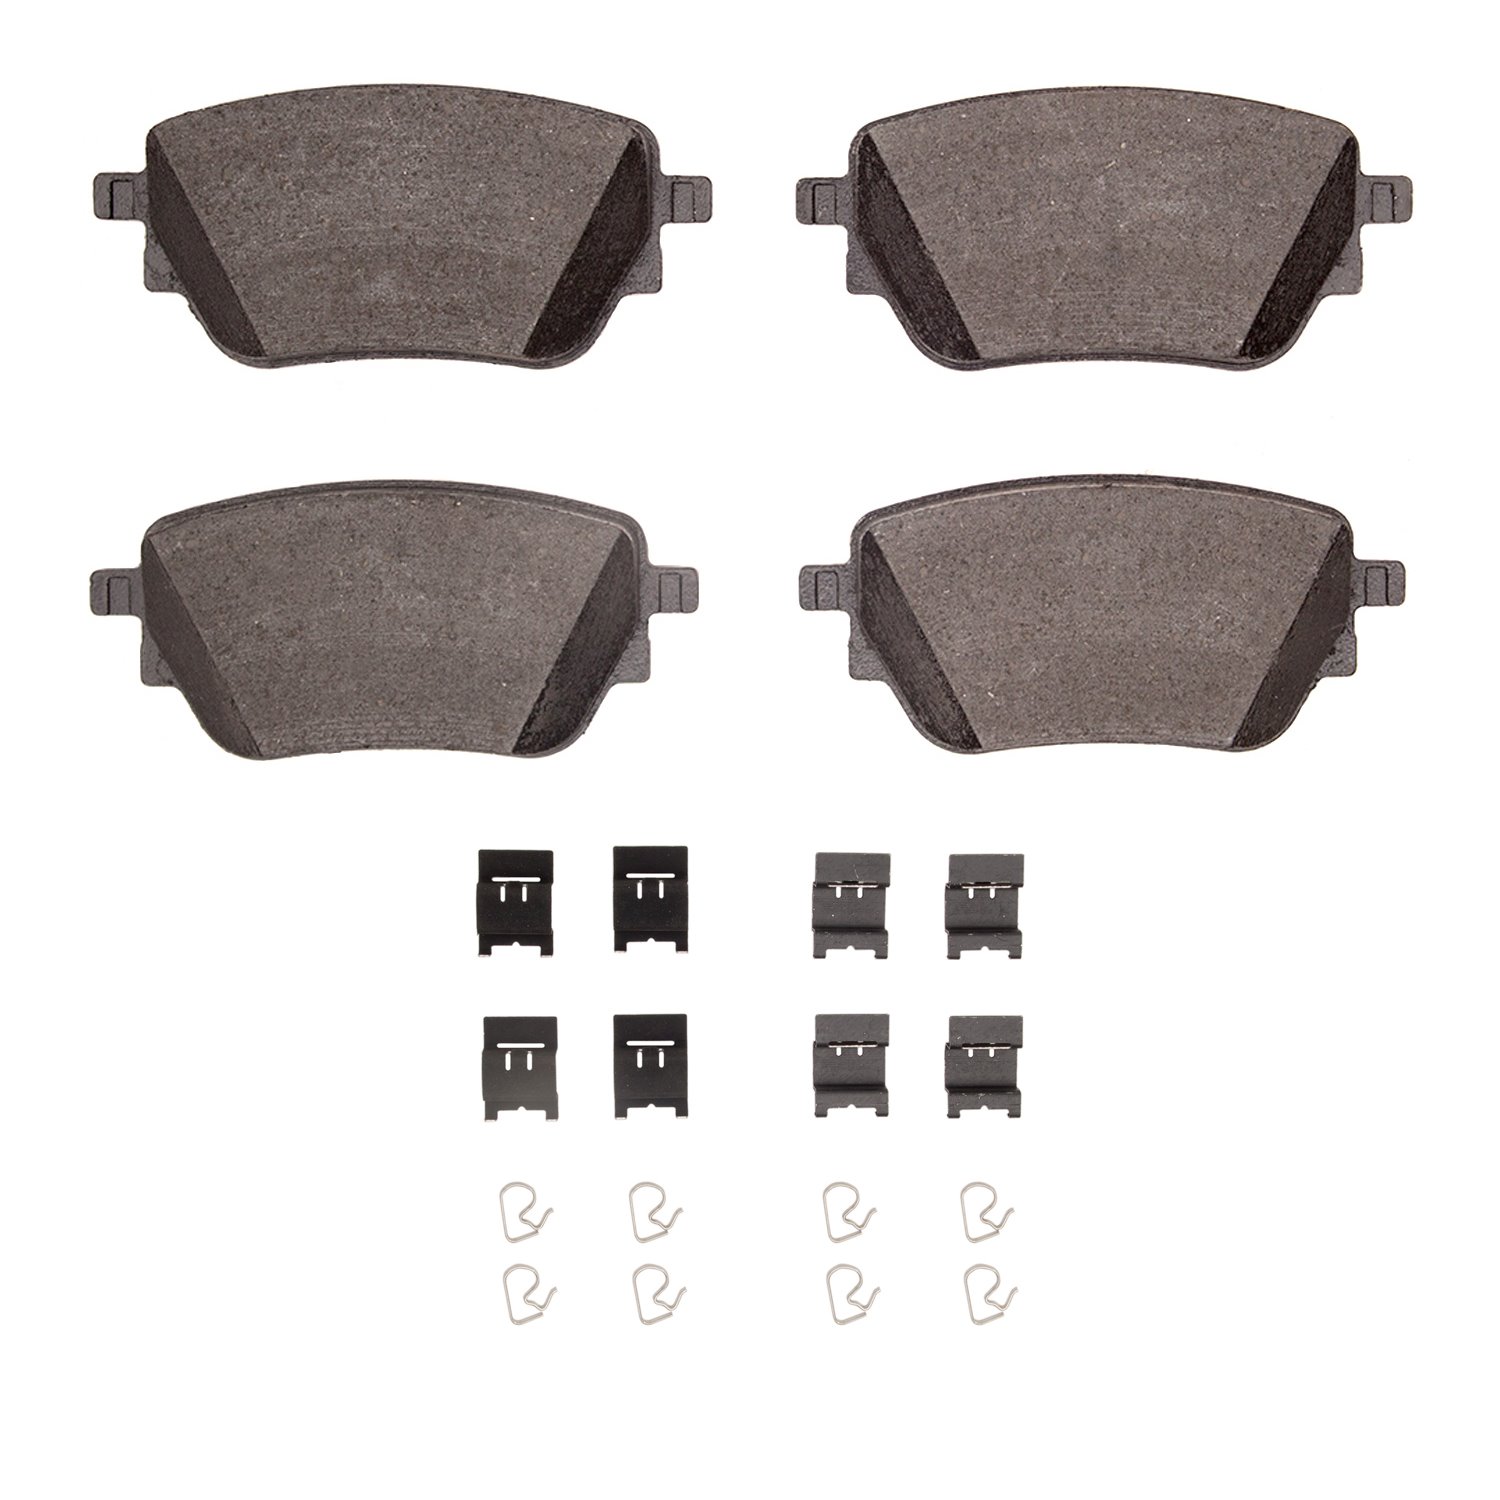 1600-2207-01 5000 Euro Ceramic Brake Pads & Hardware Kit, Fits Select Mercedes-Benz, Position: Rear